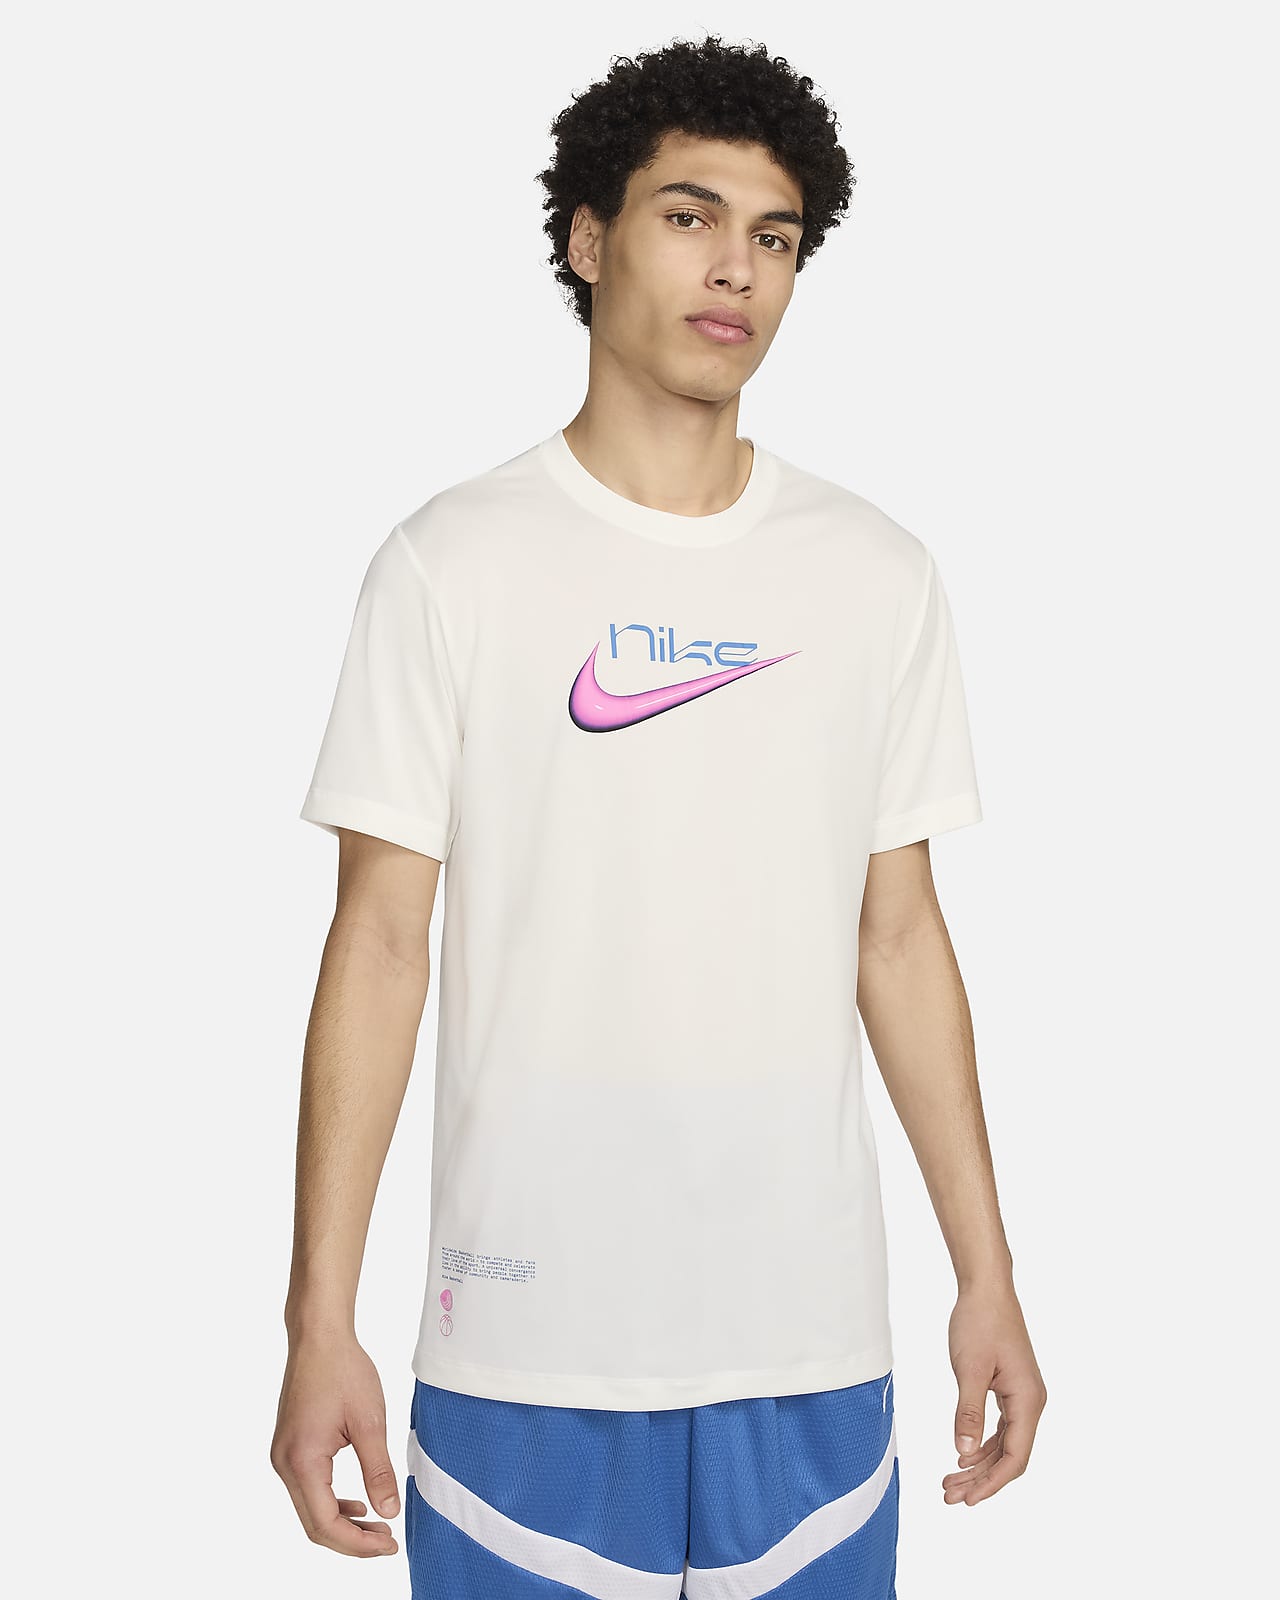 Nike Dri-FIT basketbalshirt voor heren